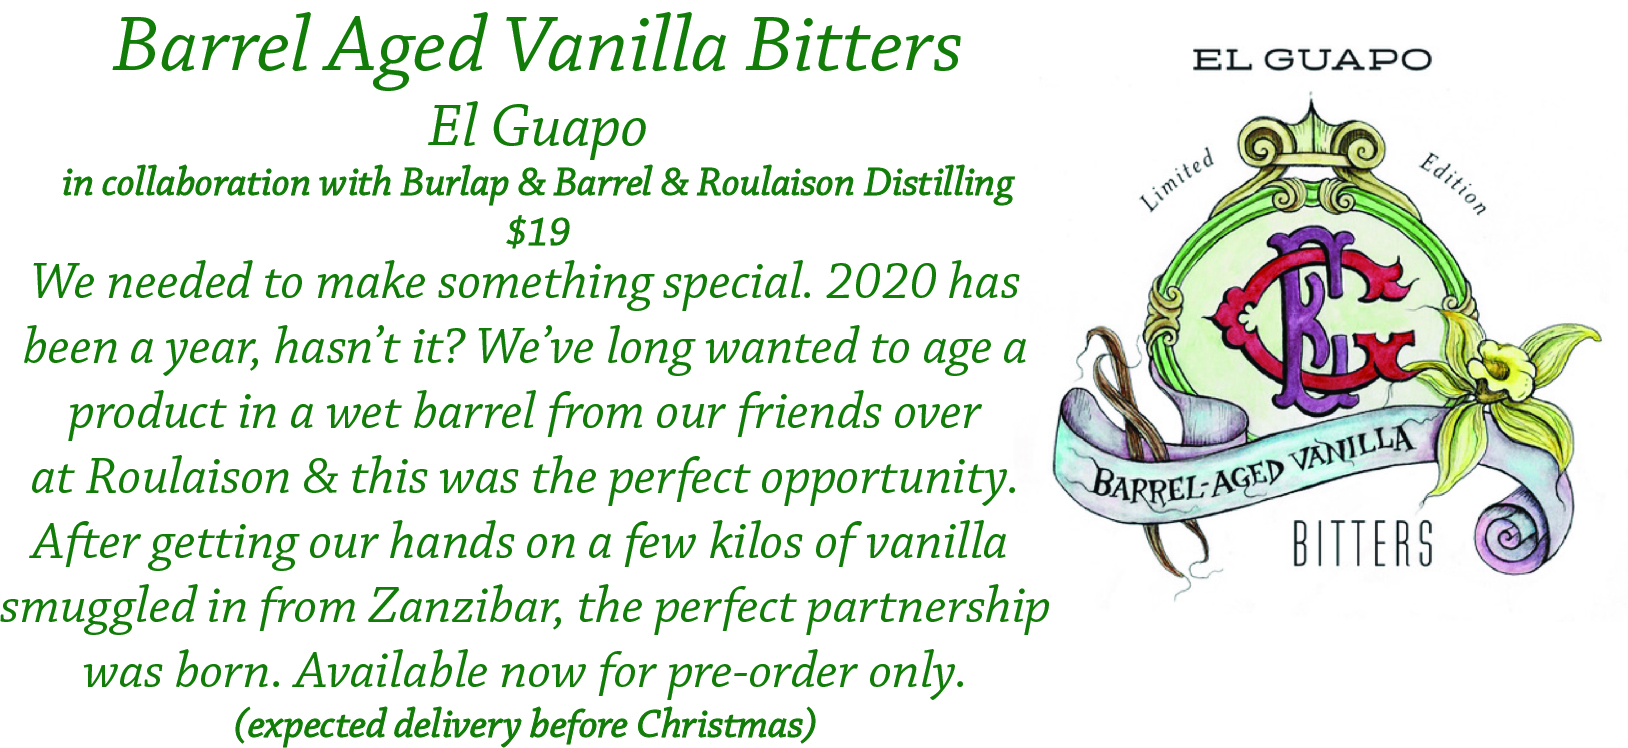 El Guapo Barrel Aged Vanilla Bitters